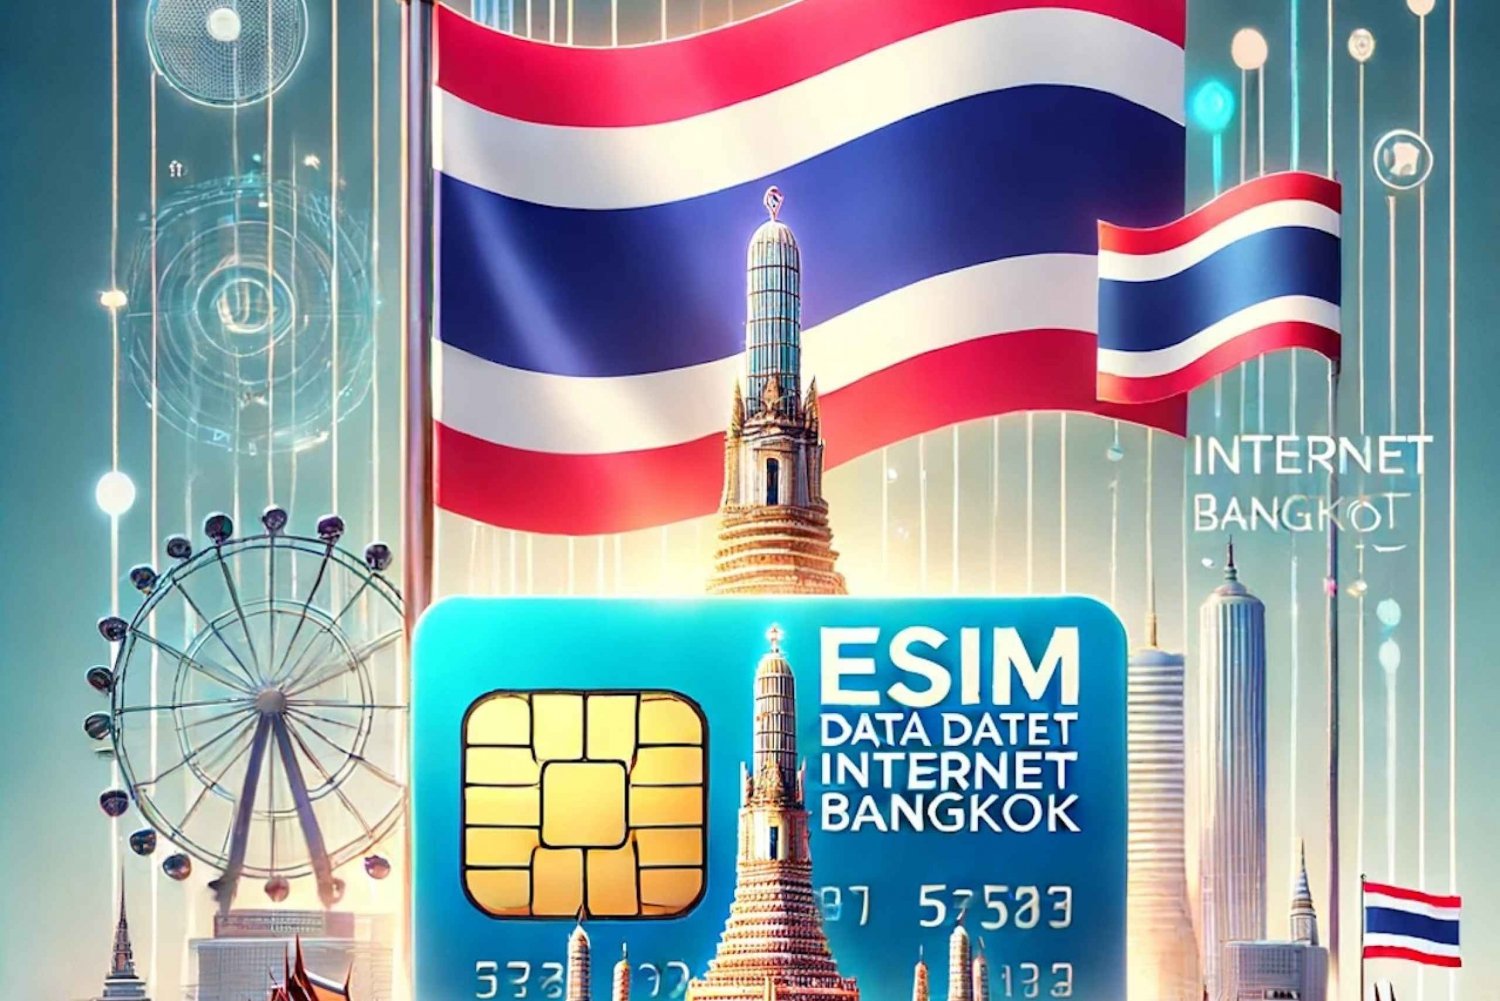 Bangkok: Thailand eSIM Internet Data Plan for 4G/5G